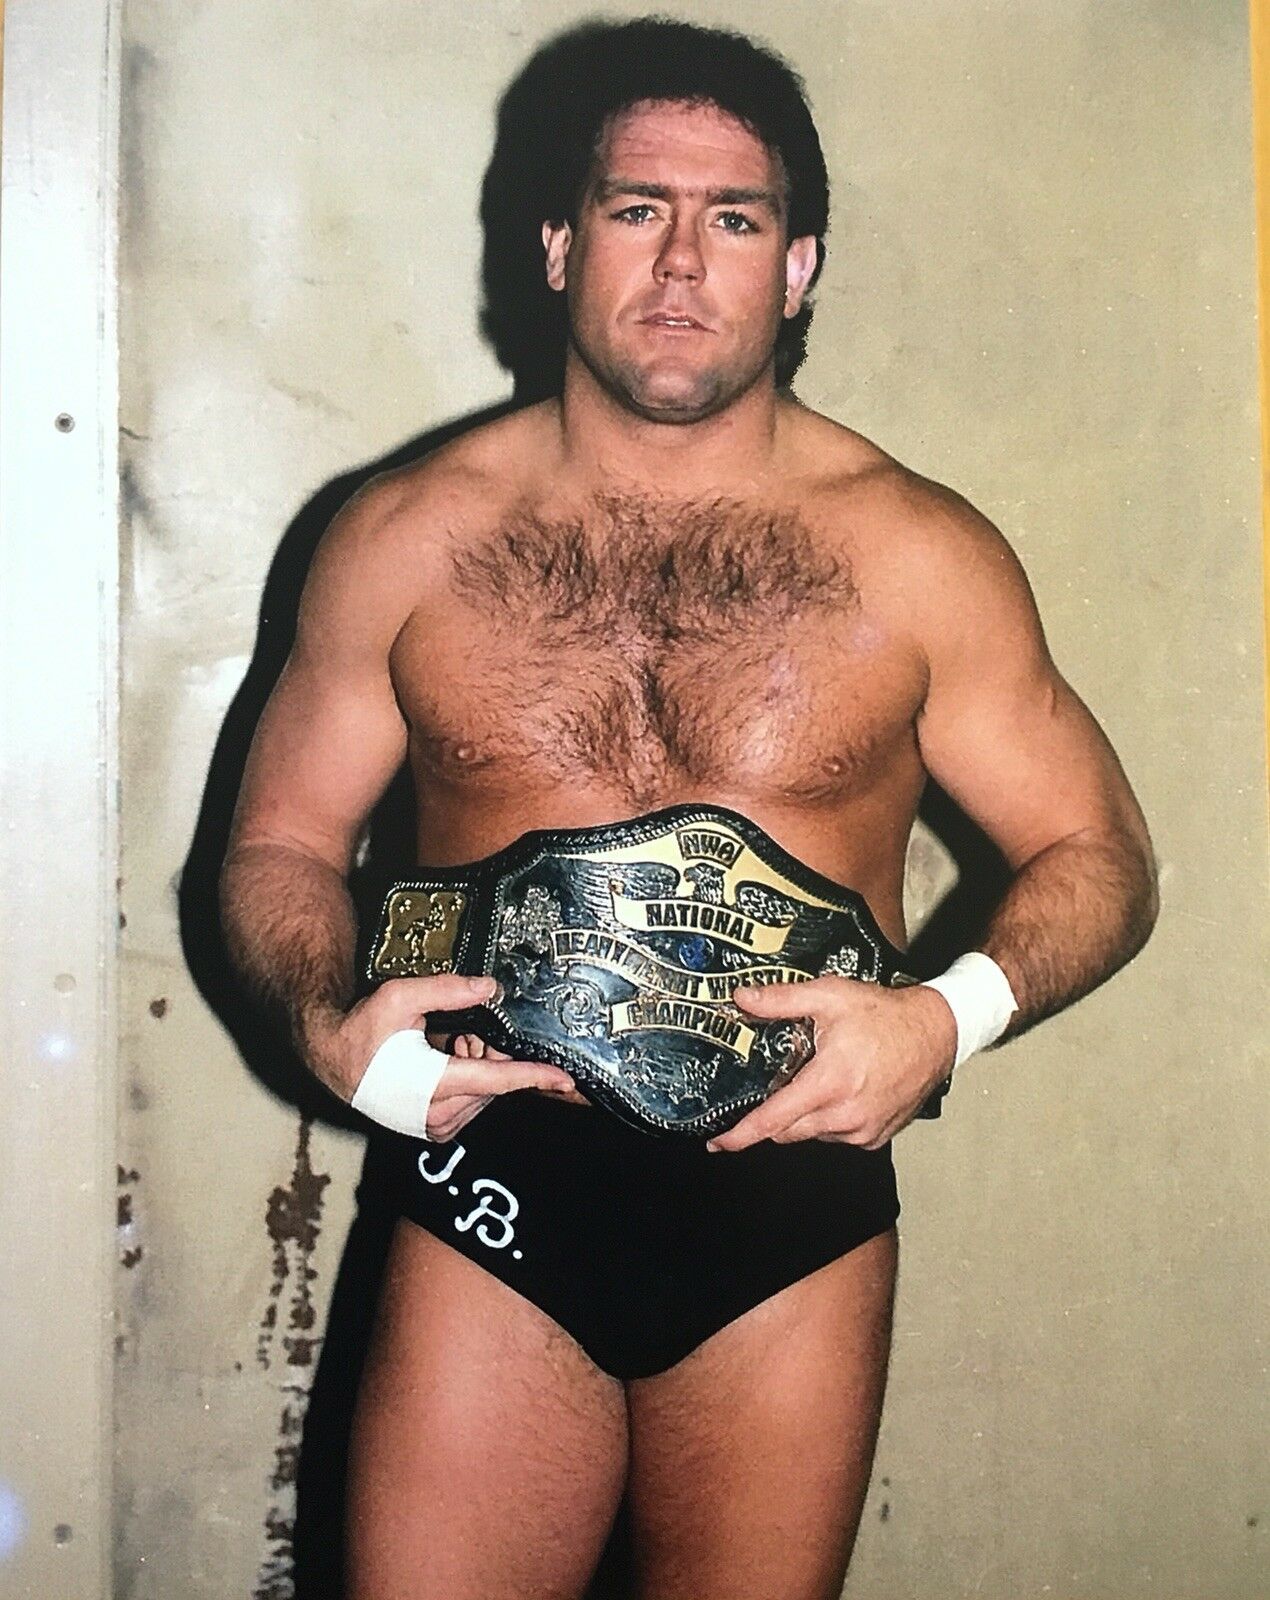 Tully Blanchard 11x14 Photo Print NWA Wrestling - 4 Horsemen -WWE WWF